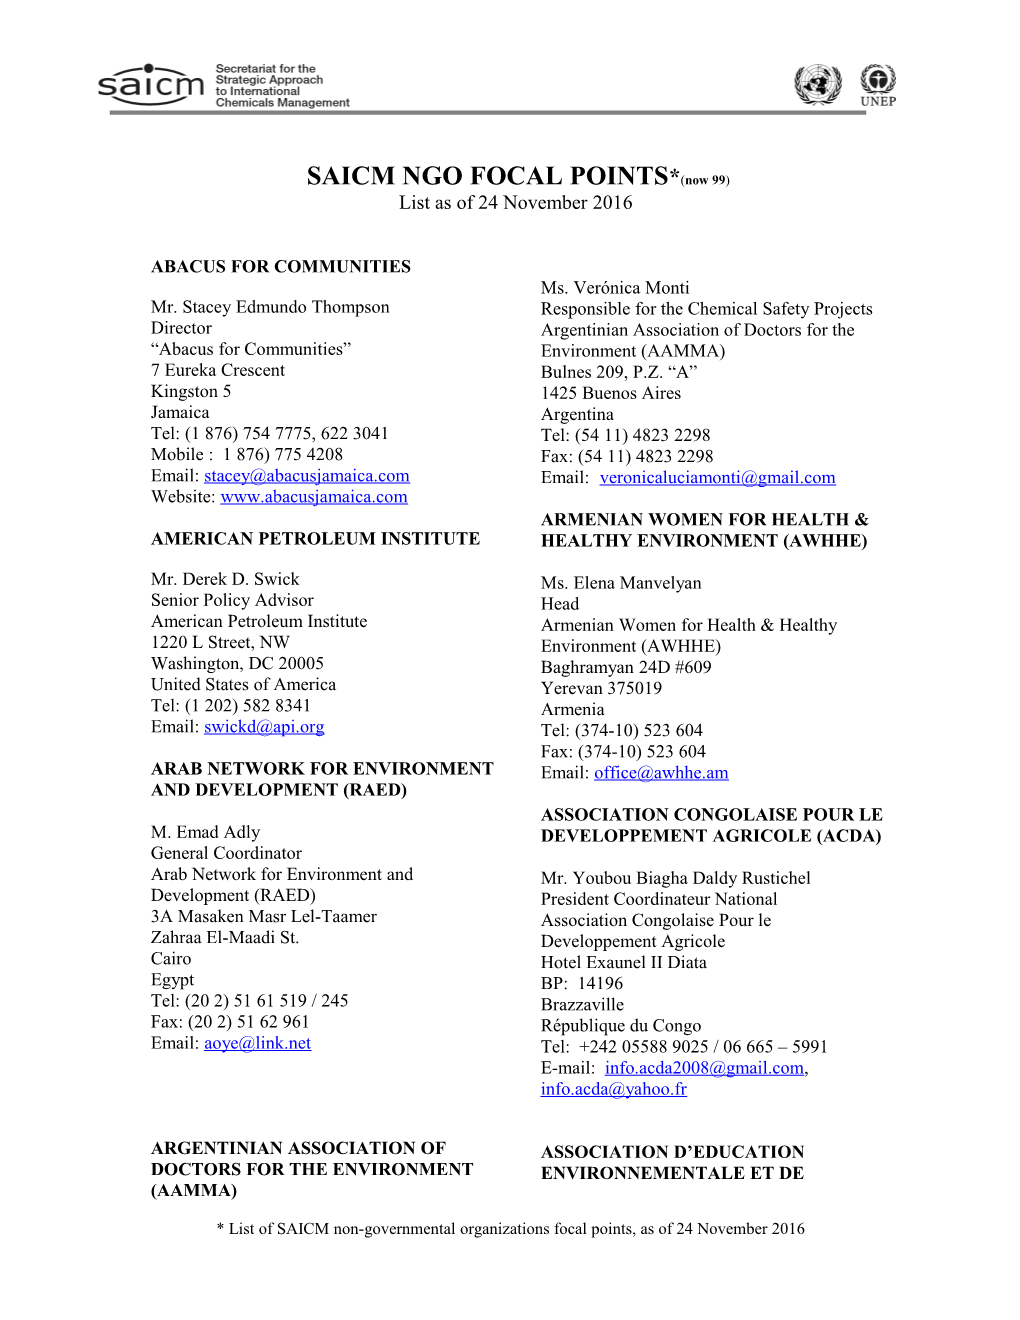 Saicm National Focal Points*